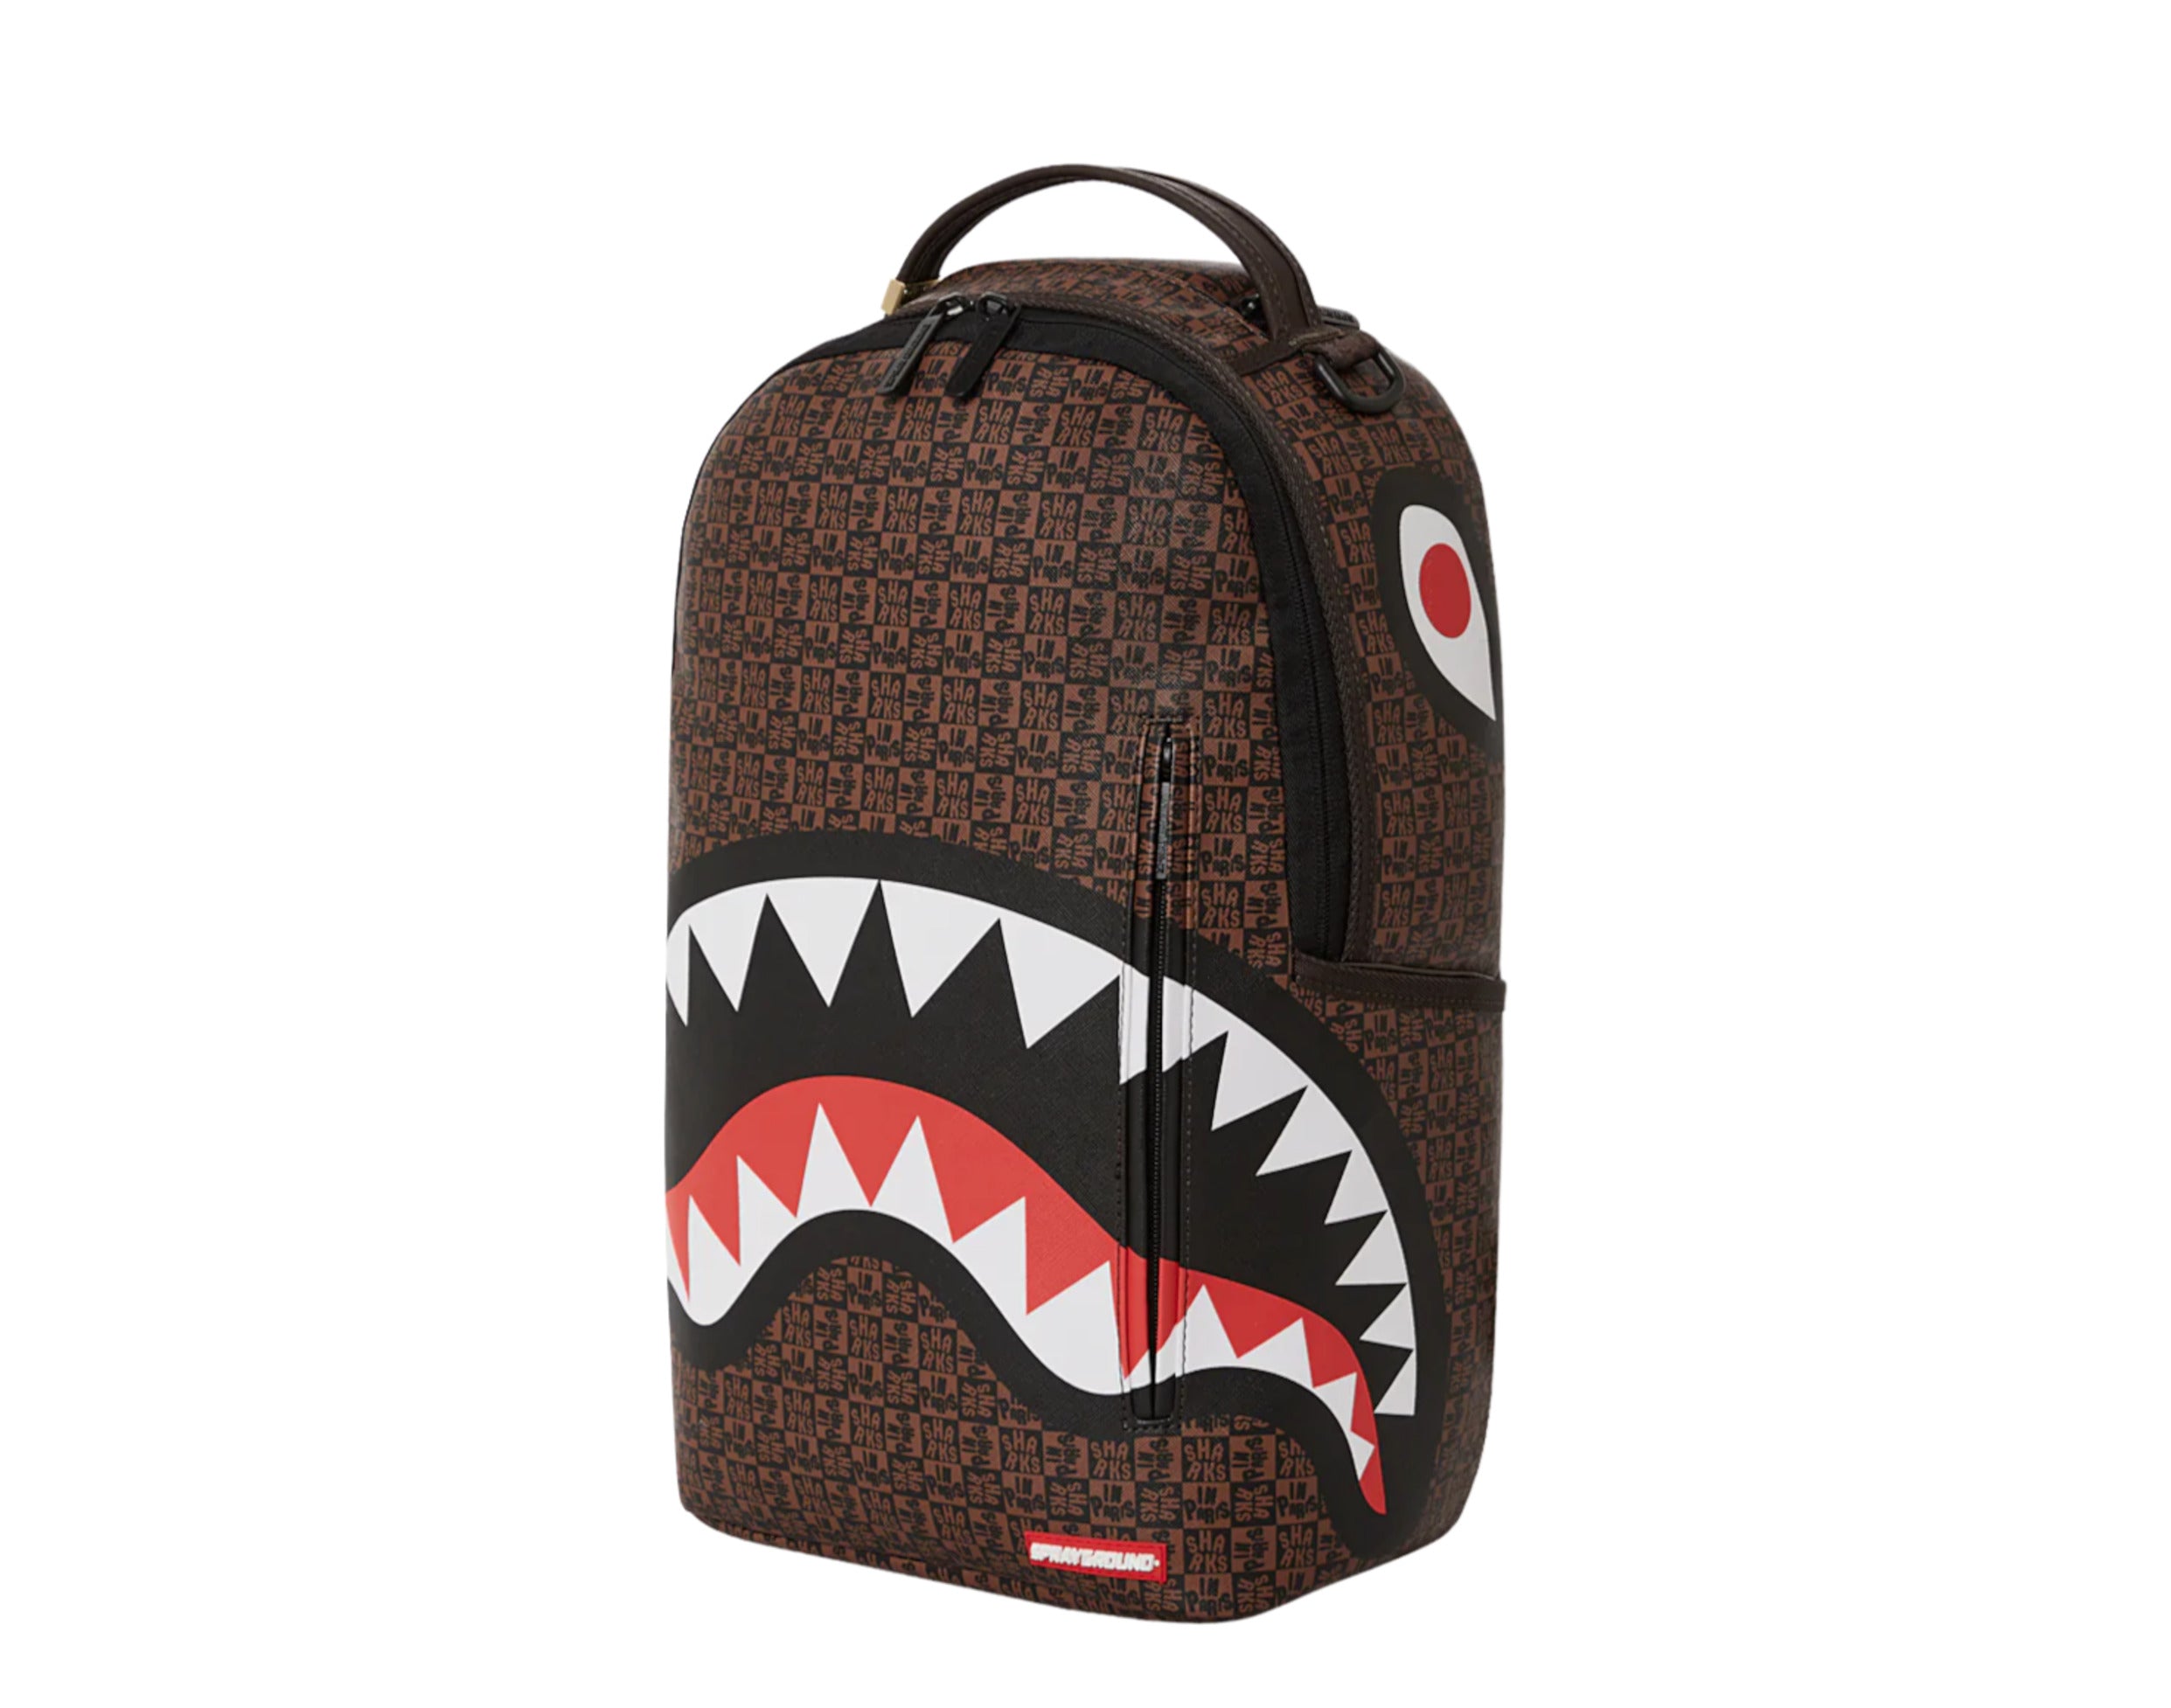 Sprayground Kid Rhinestone Shark Backpack - Farfetch